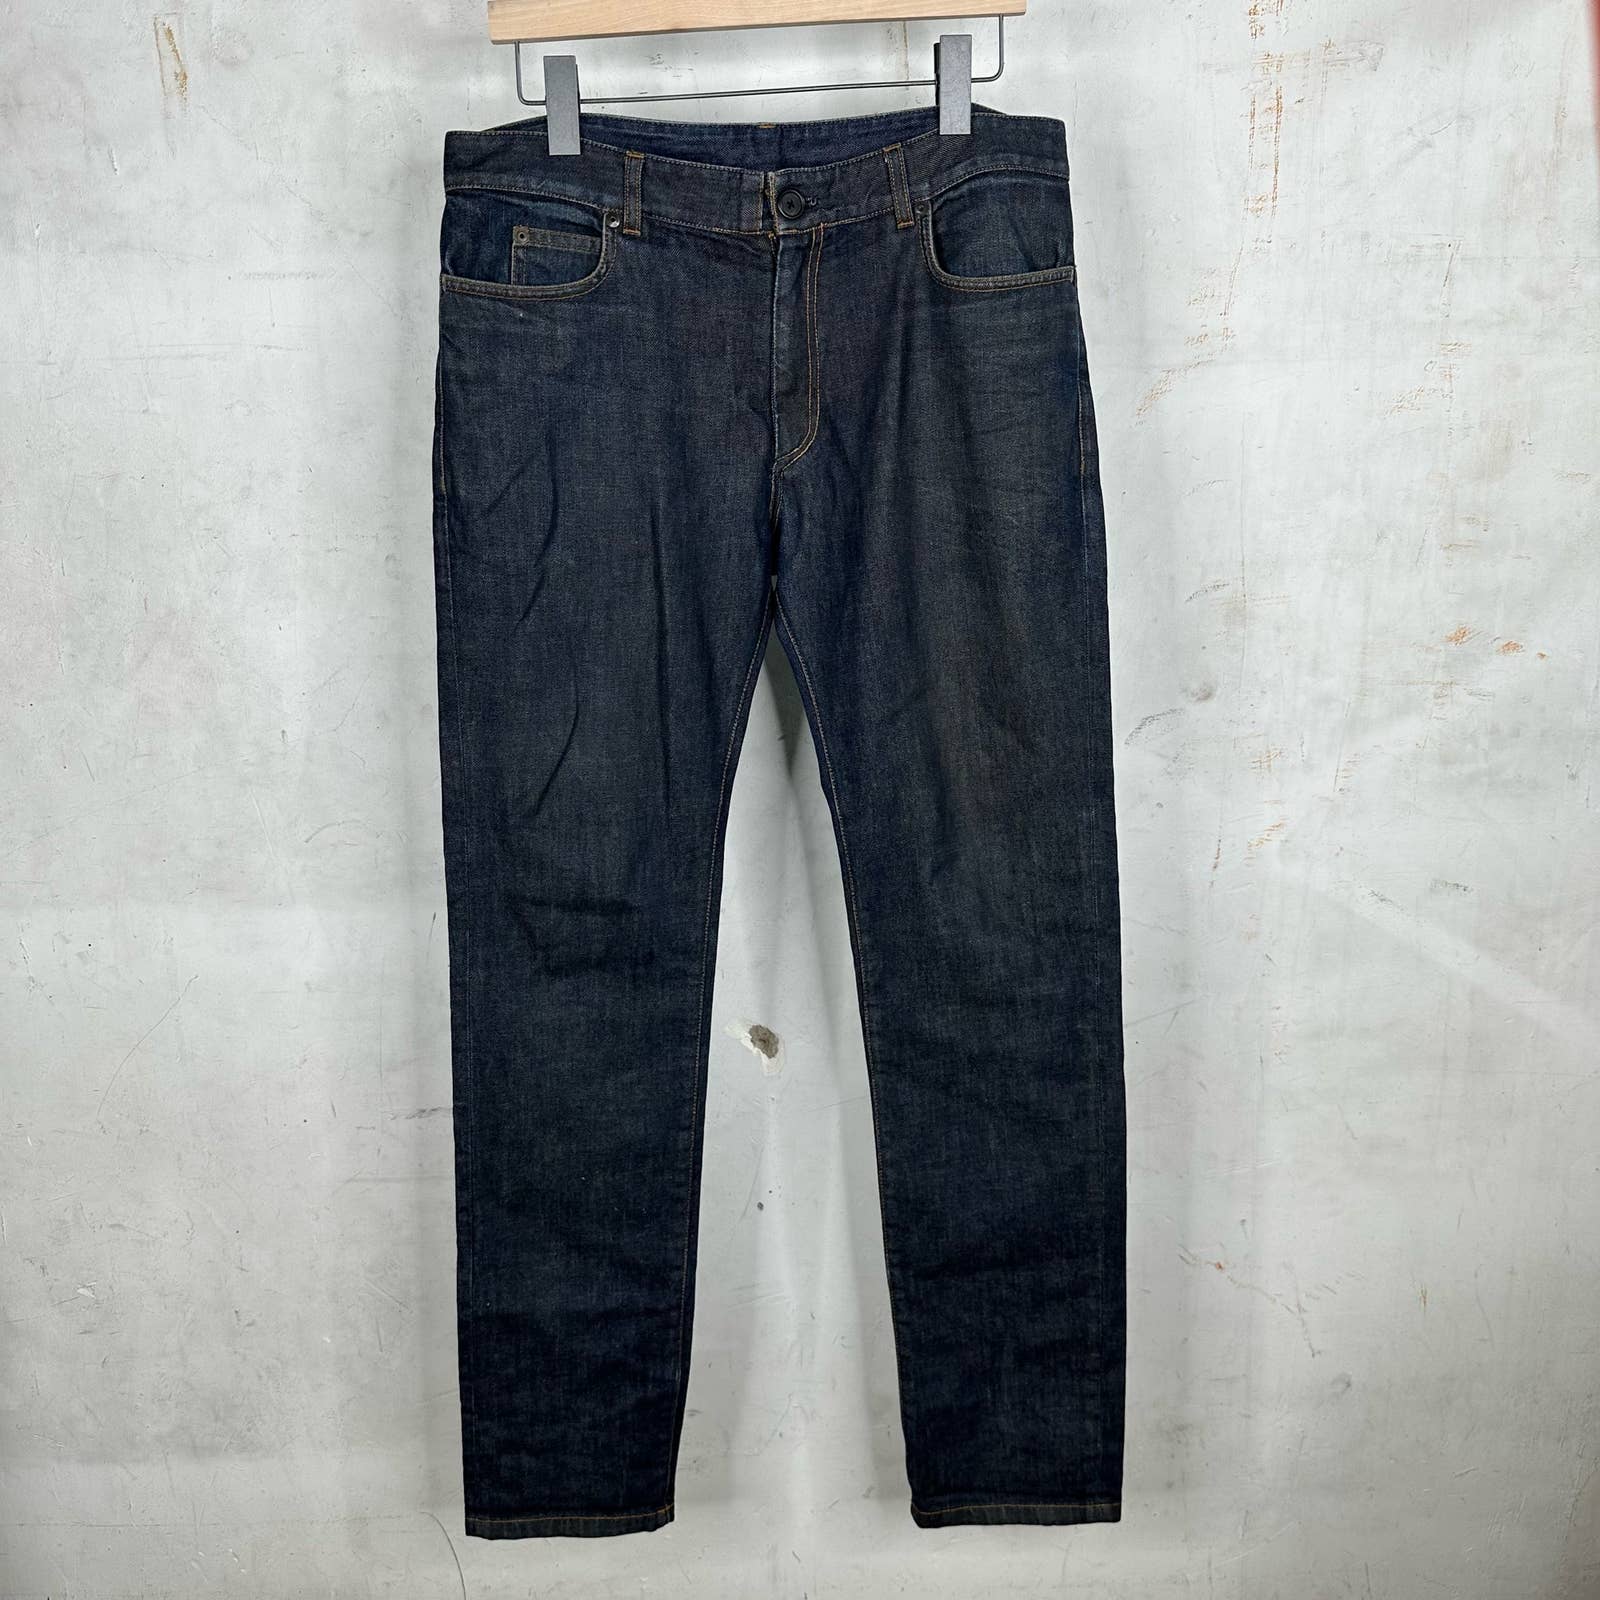 Maison Martin Margiela Dark Wash Slim Fit Denim Jeans